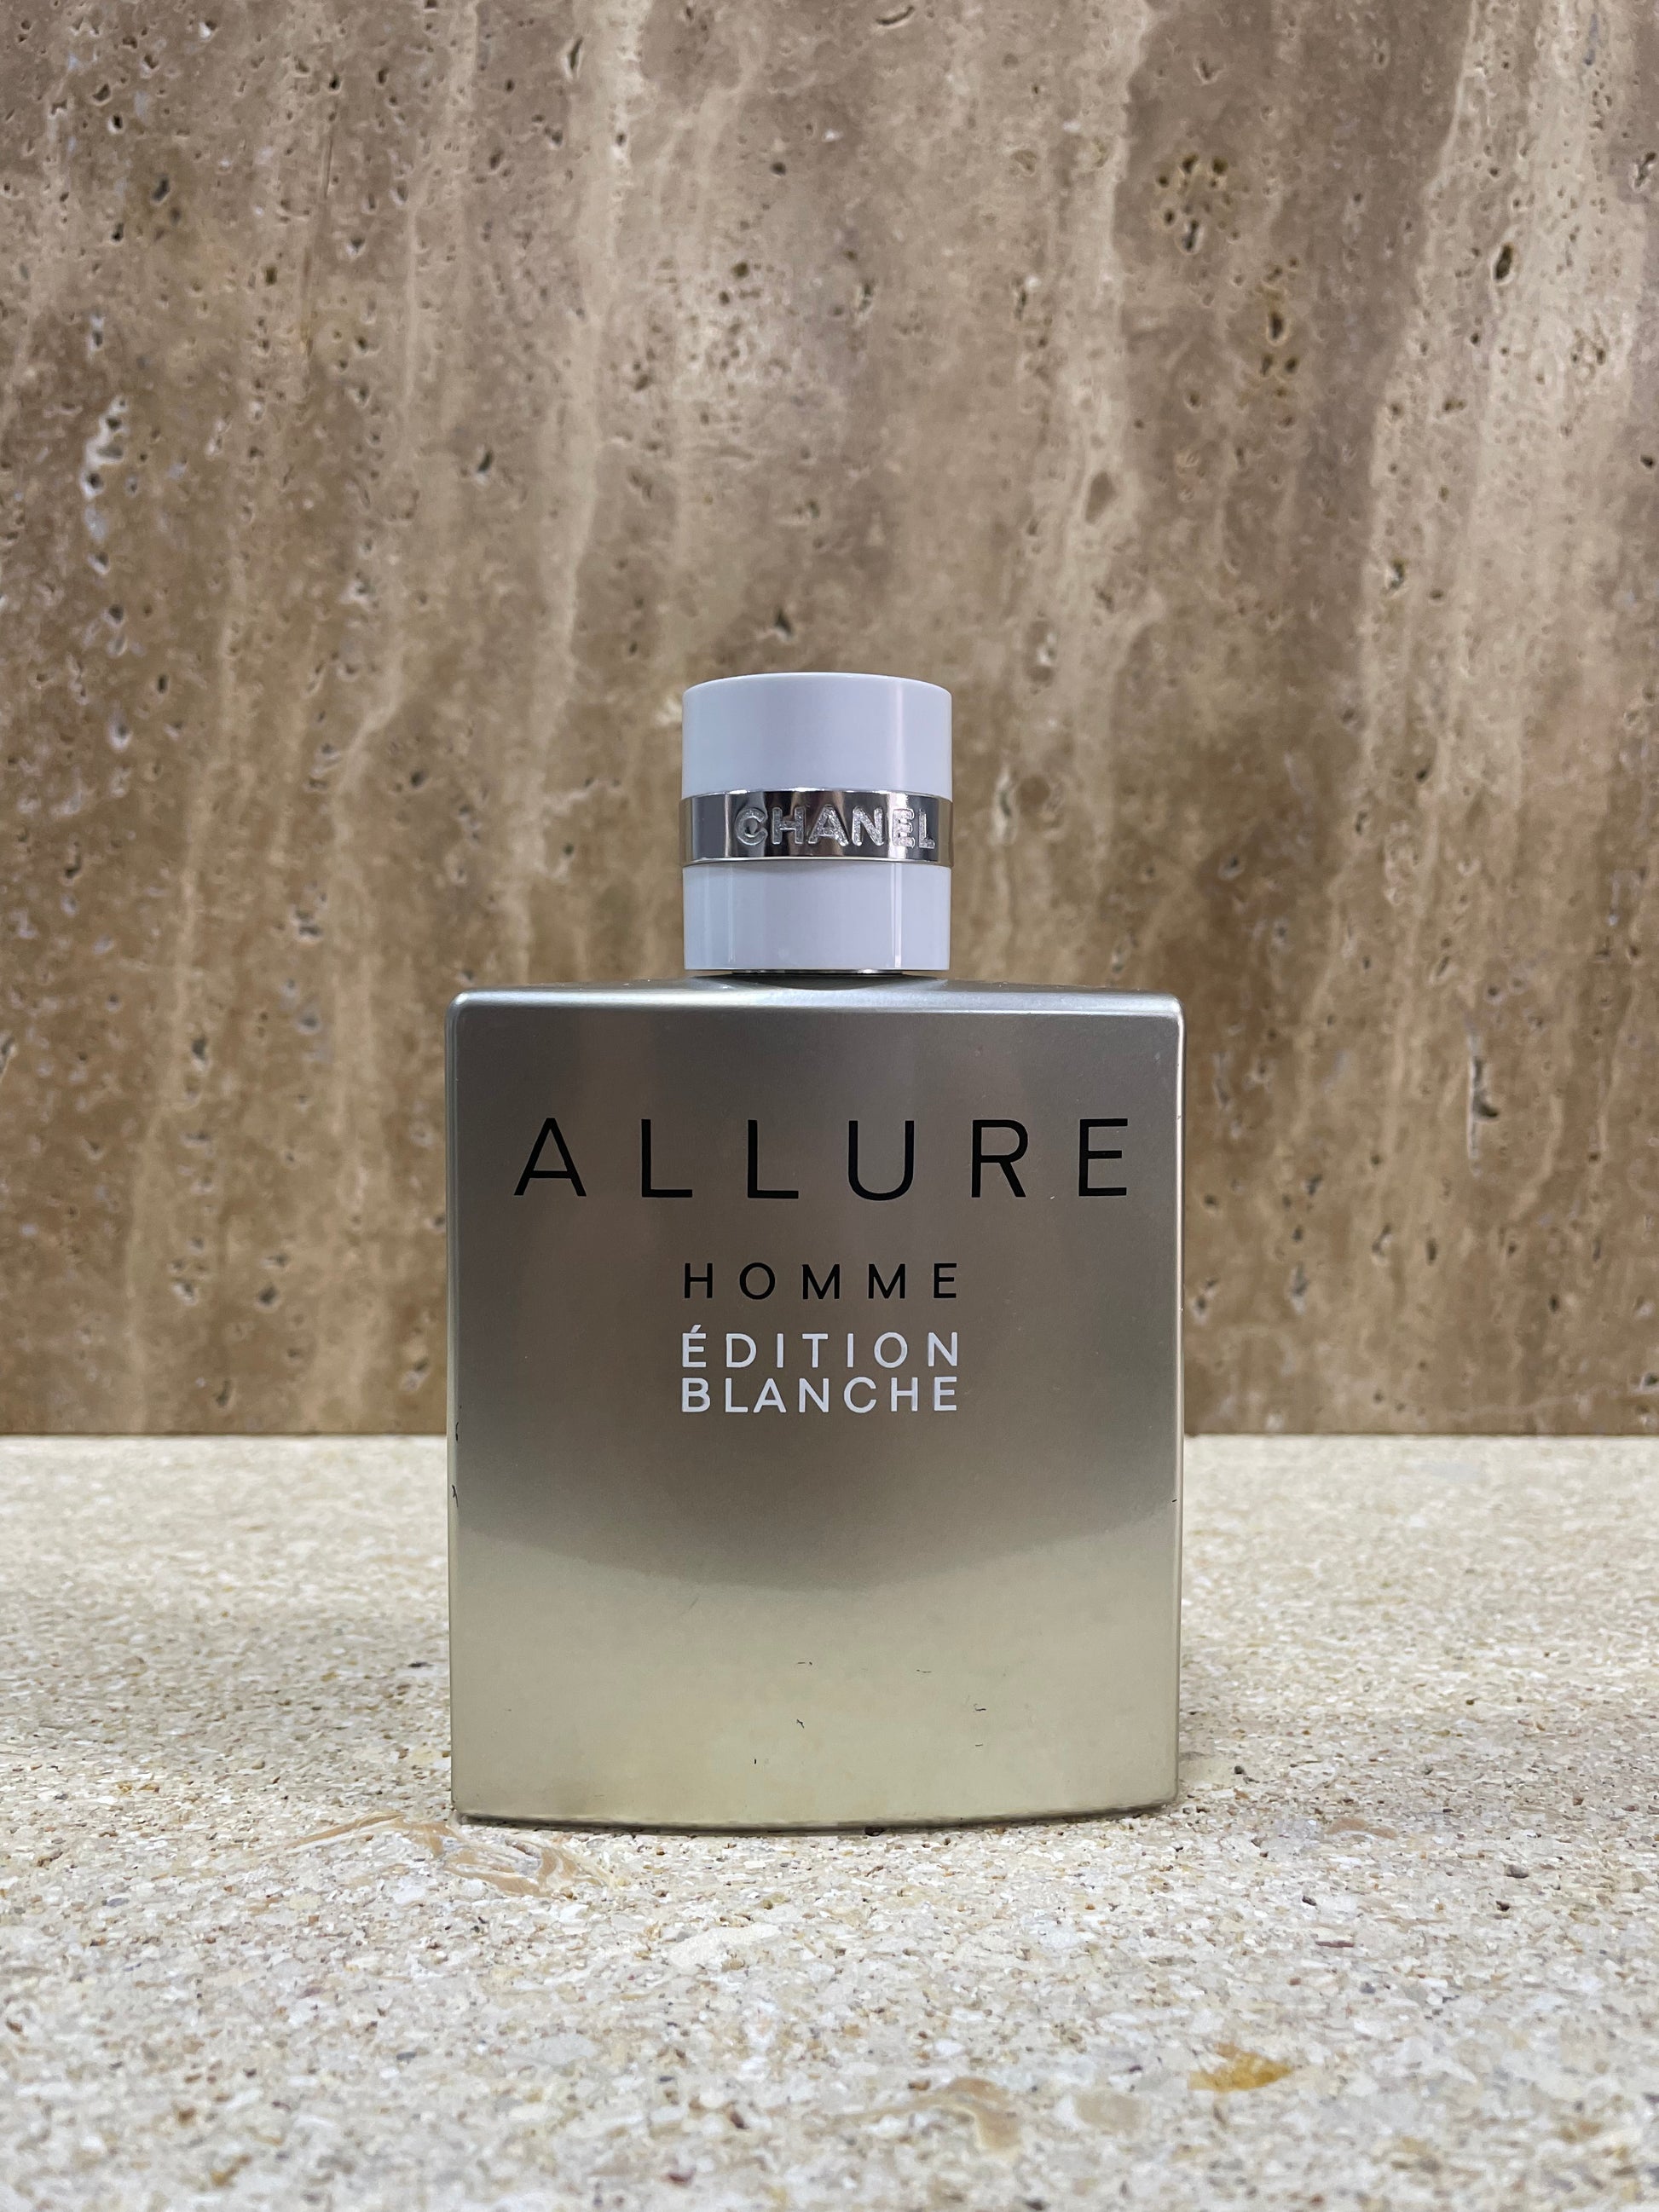 Chanel Allure Homme Edition Blanche - 150ml Eau de Parfum Spray